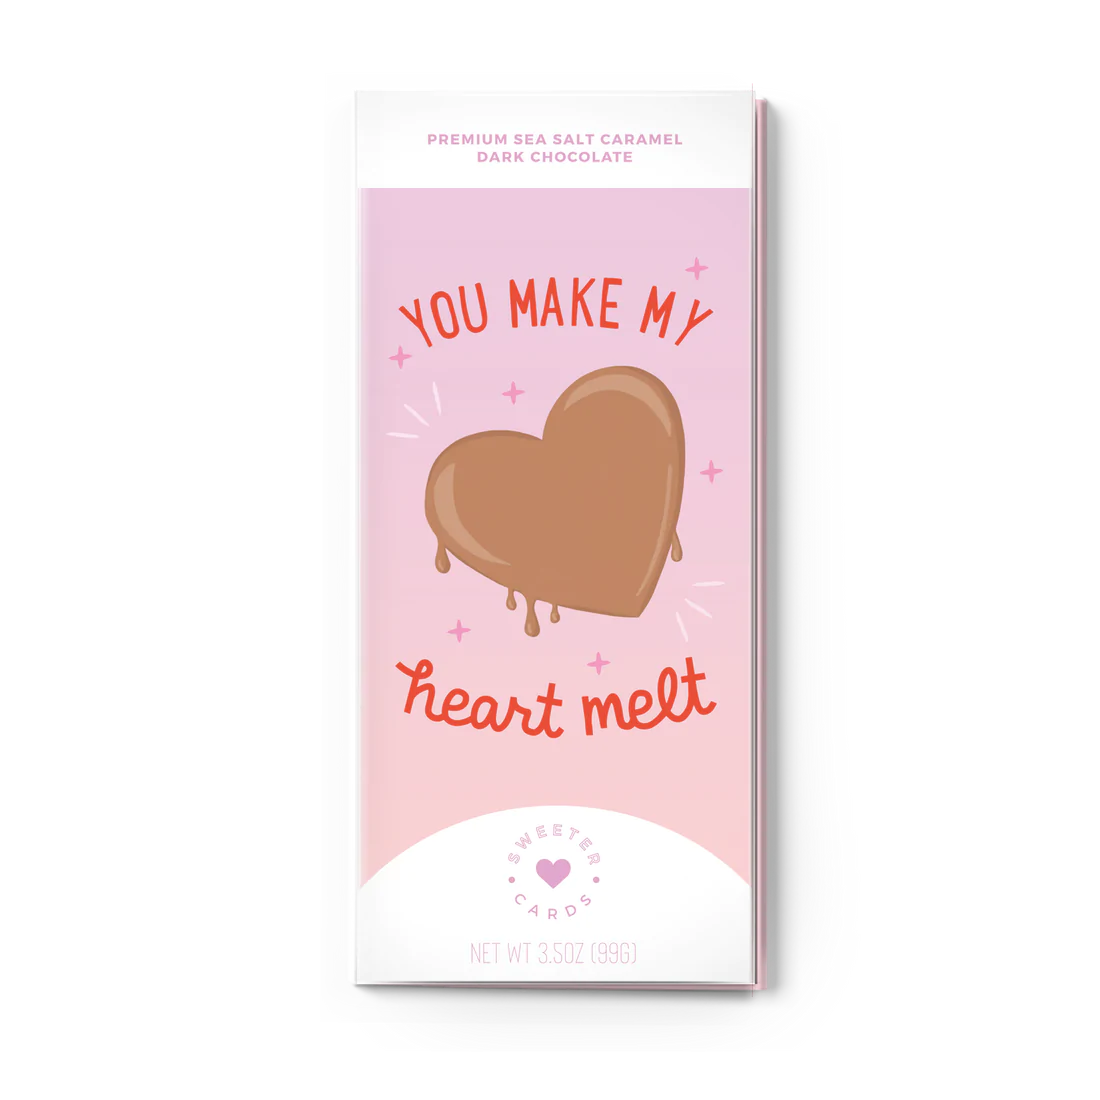 You Make My Heart Melt - Chocolate Valentine's Day Card